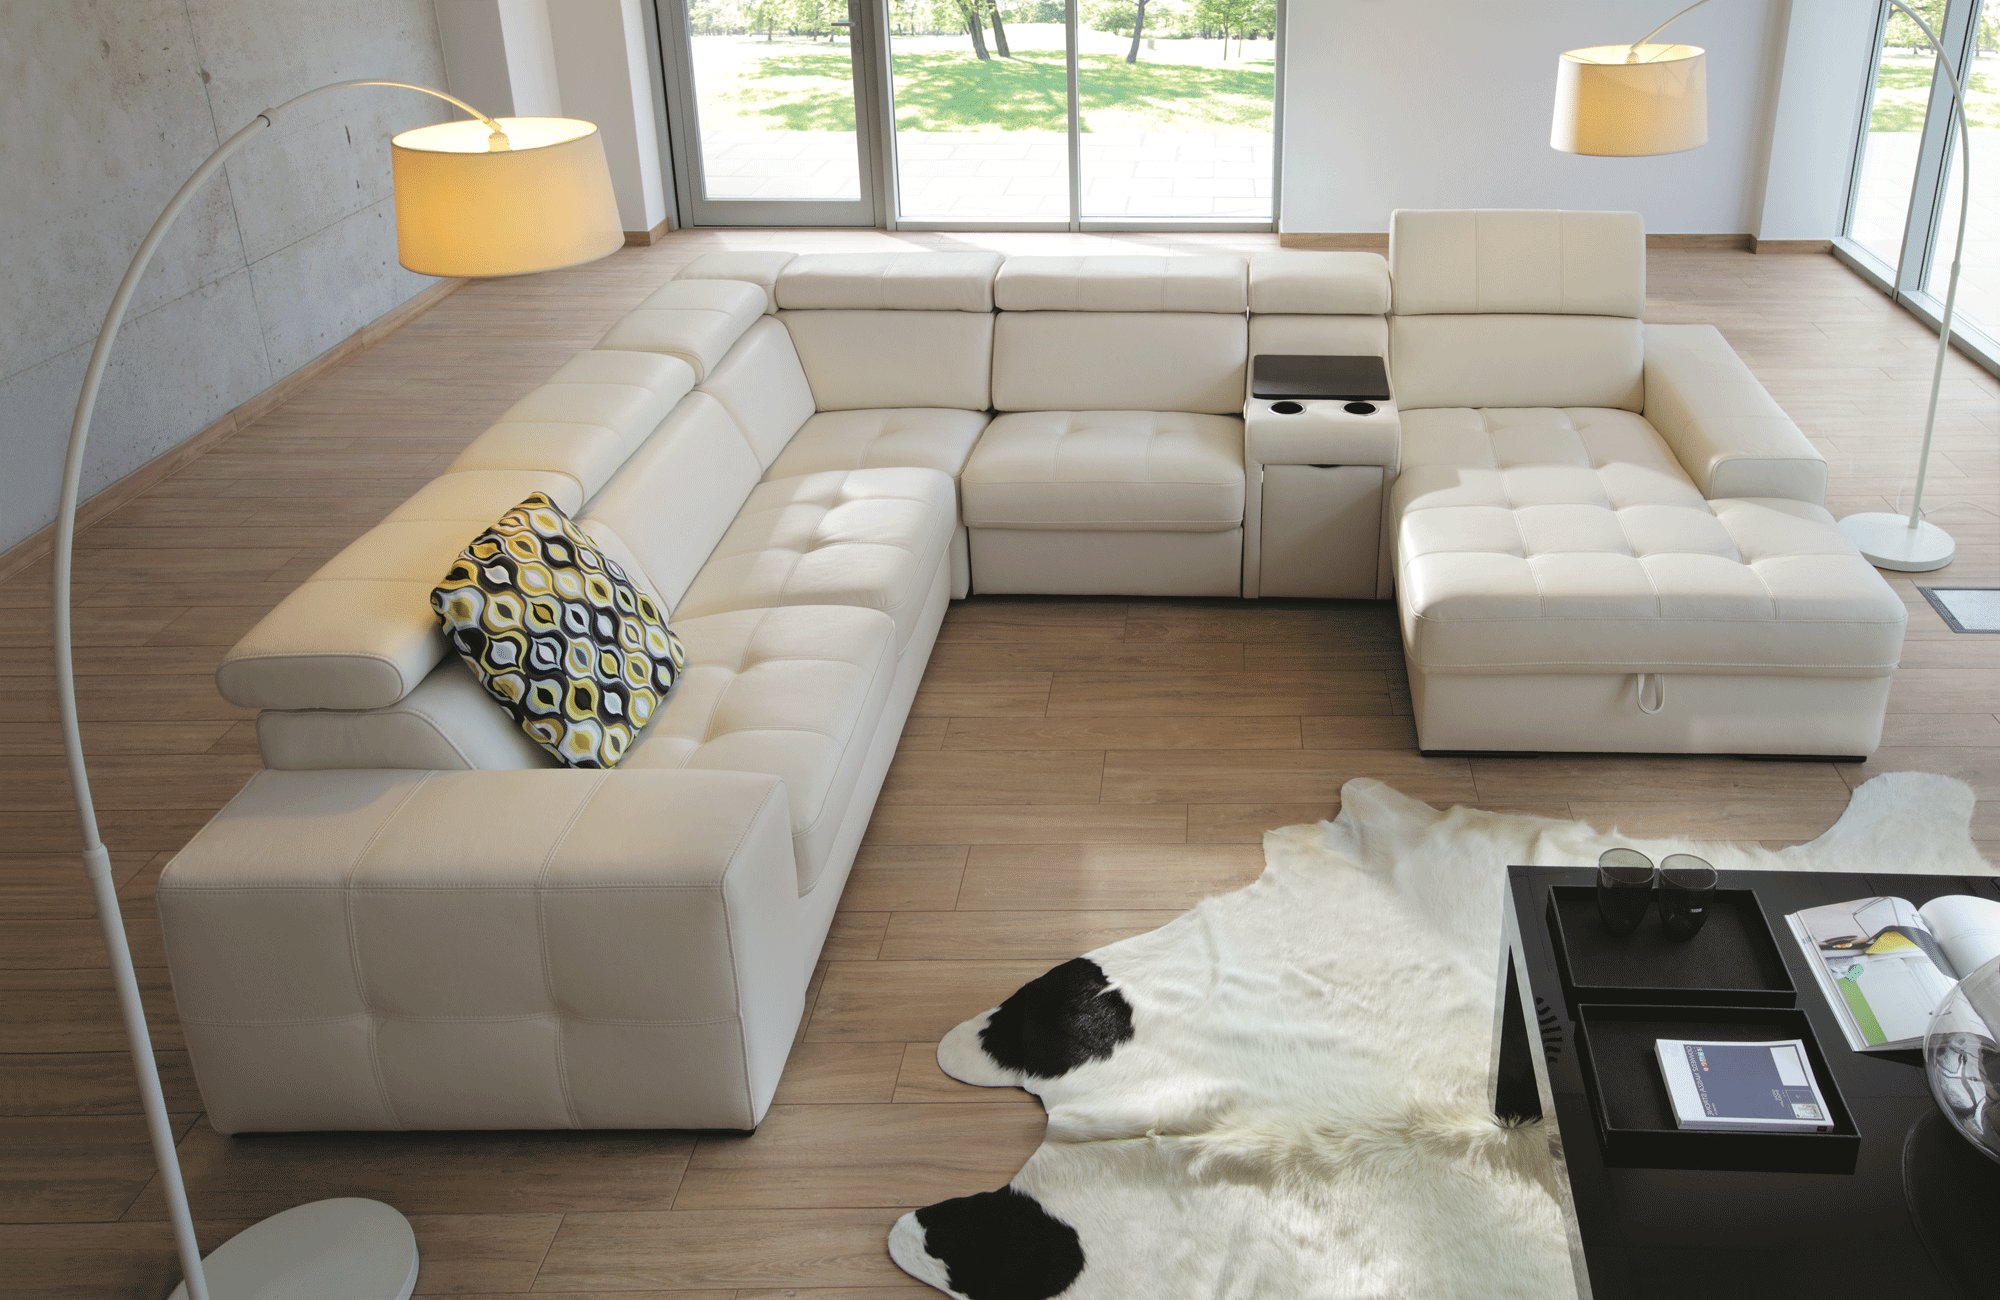 leather flip floor sofa